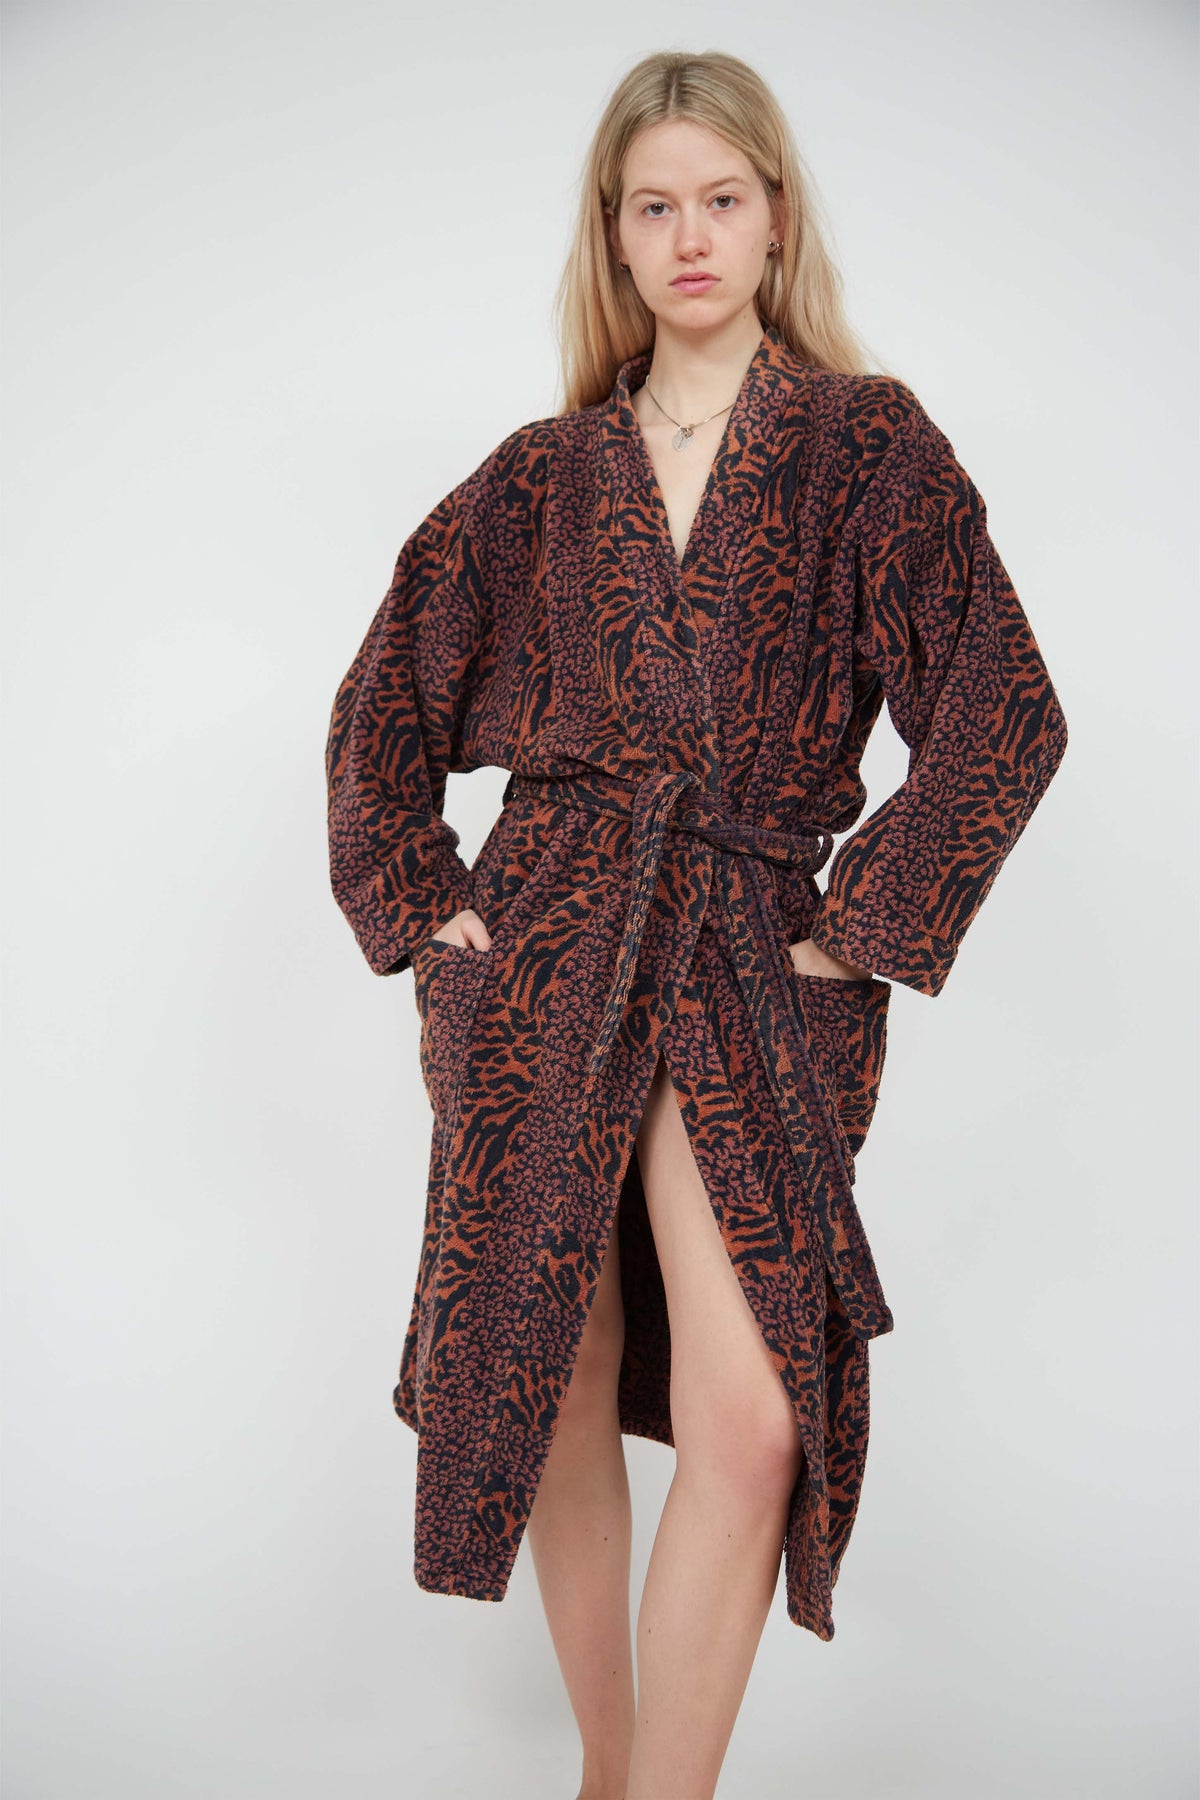 Yves Saint Laurent terry robe